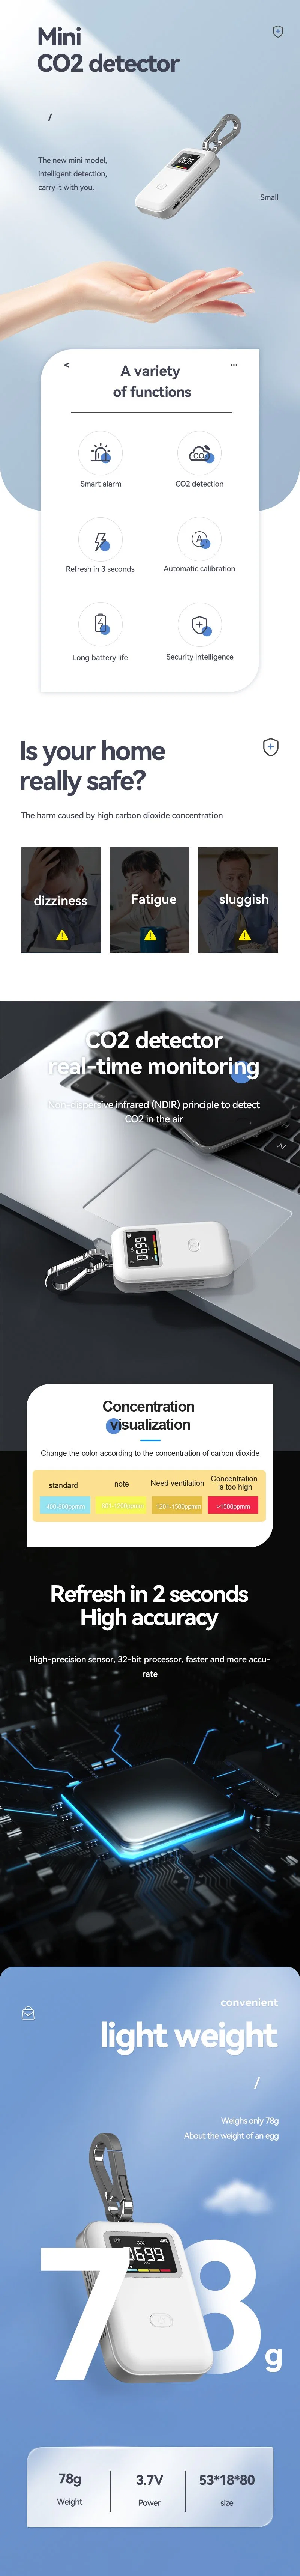 Portable Digital Indoor Monitor Mini CO2 Meter Detector for Air Monitoring